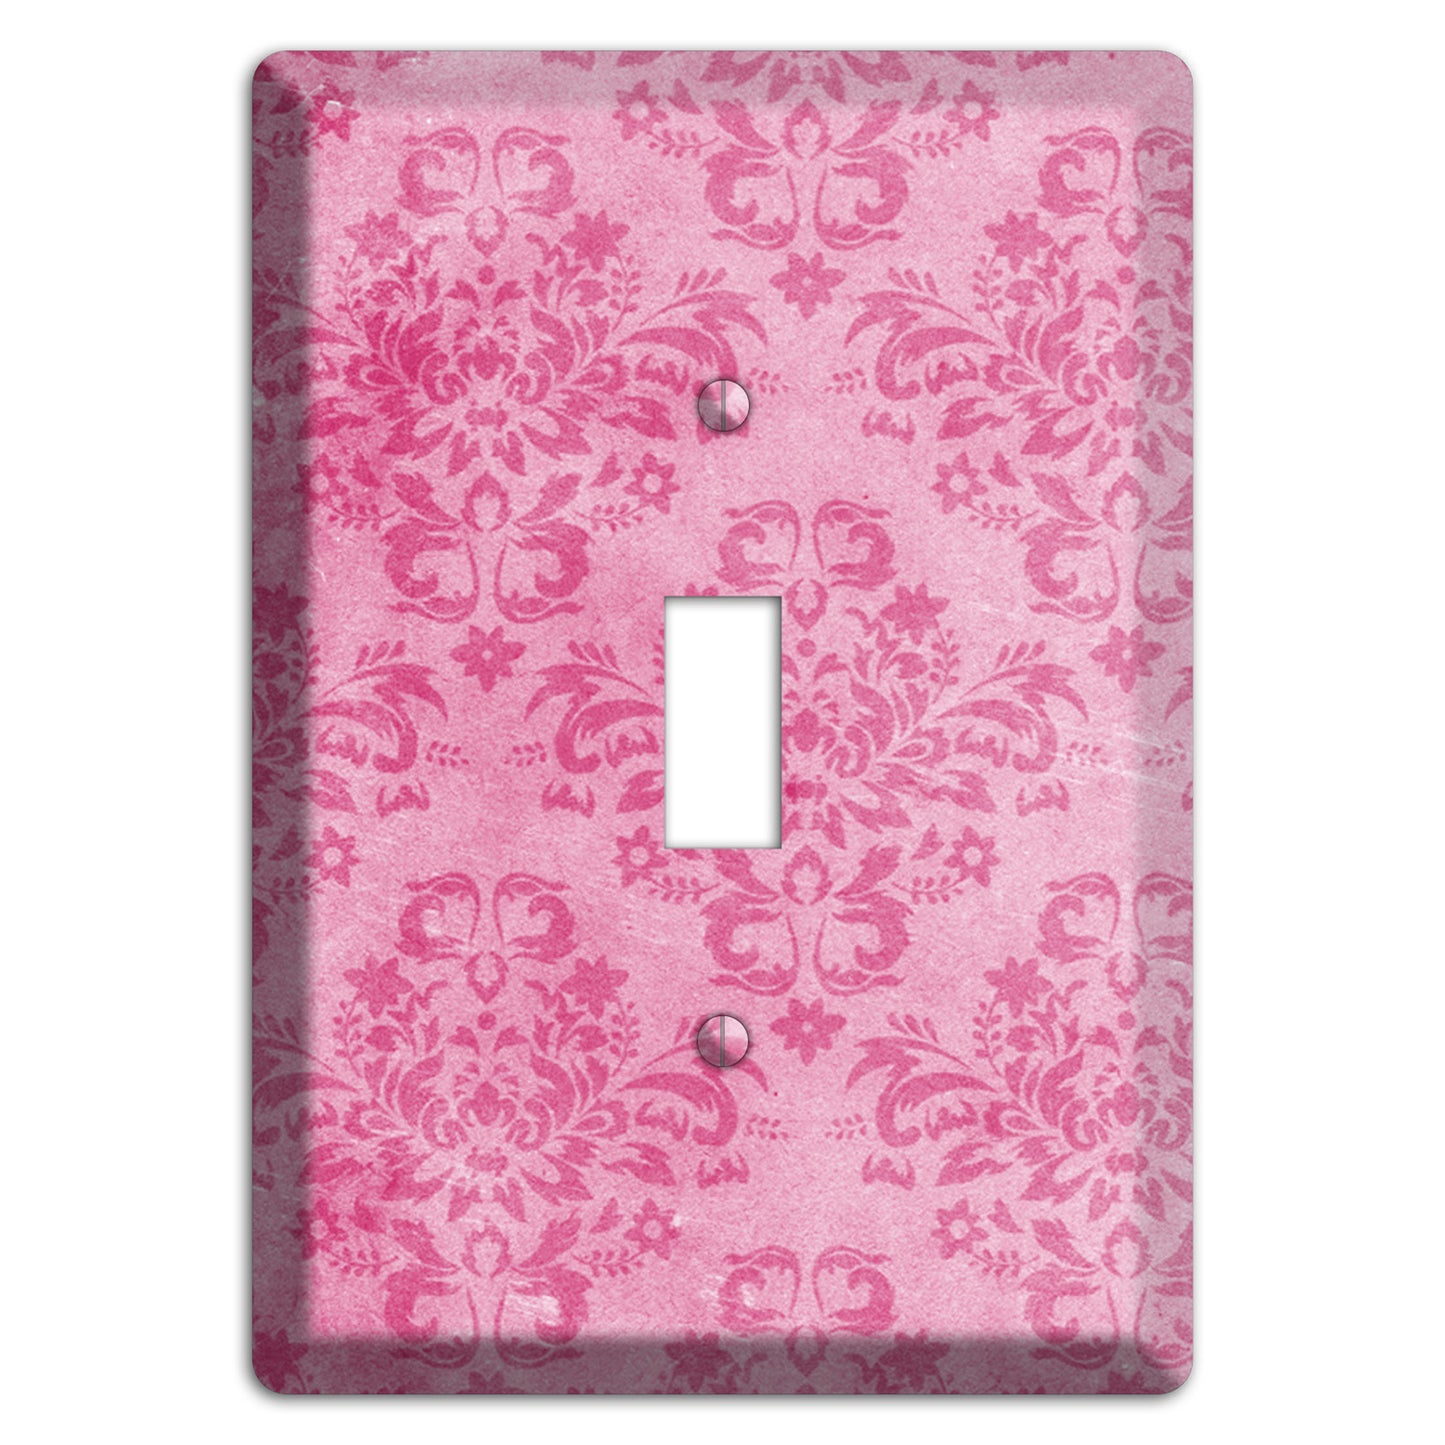 Beauty Bush Pink Texture Cover Plates